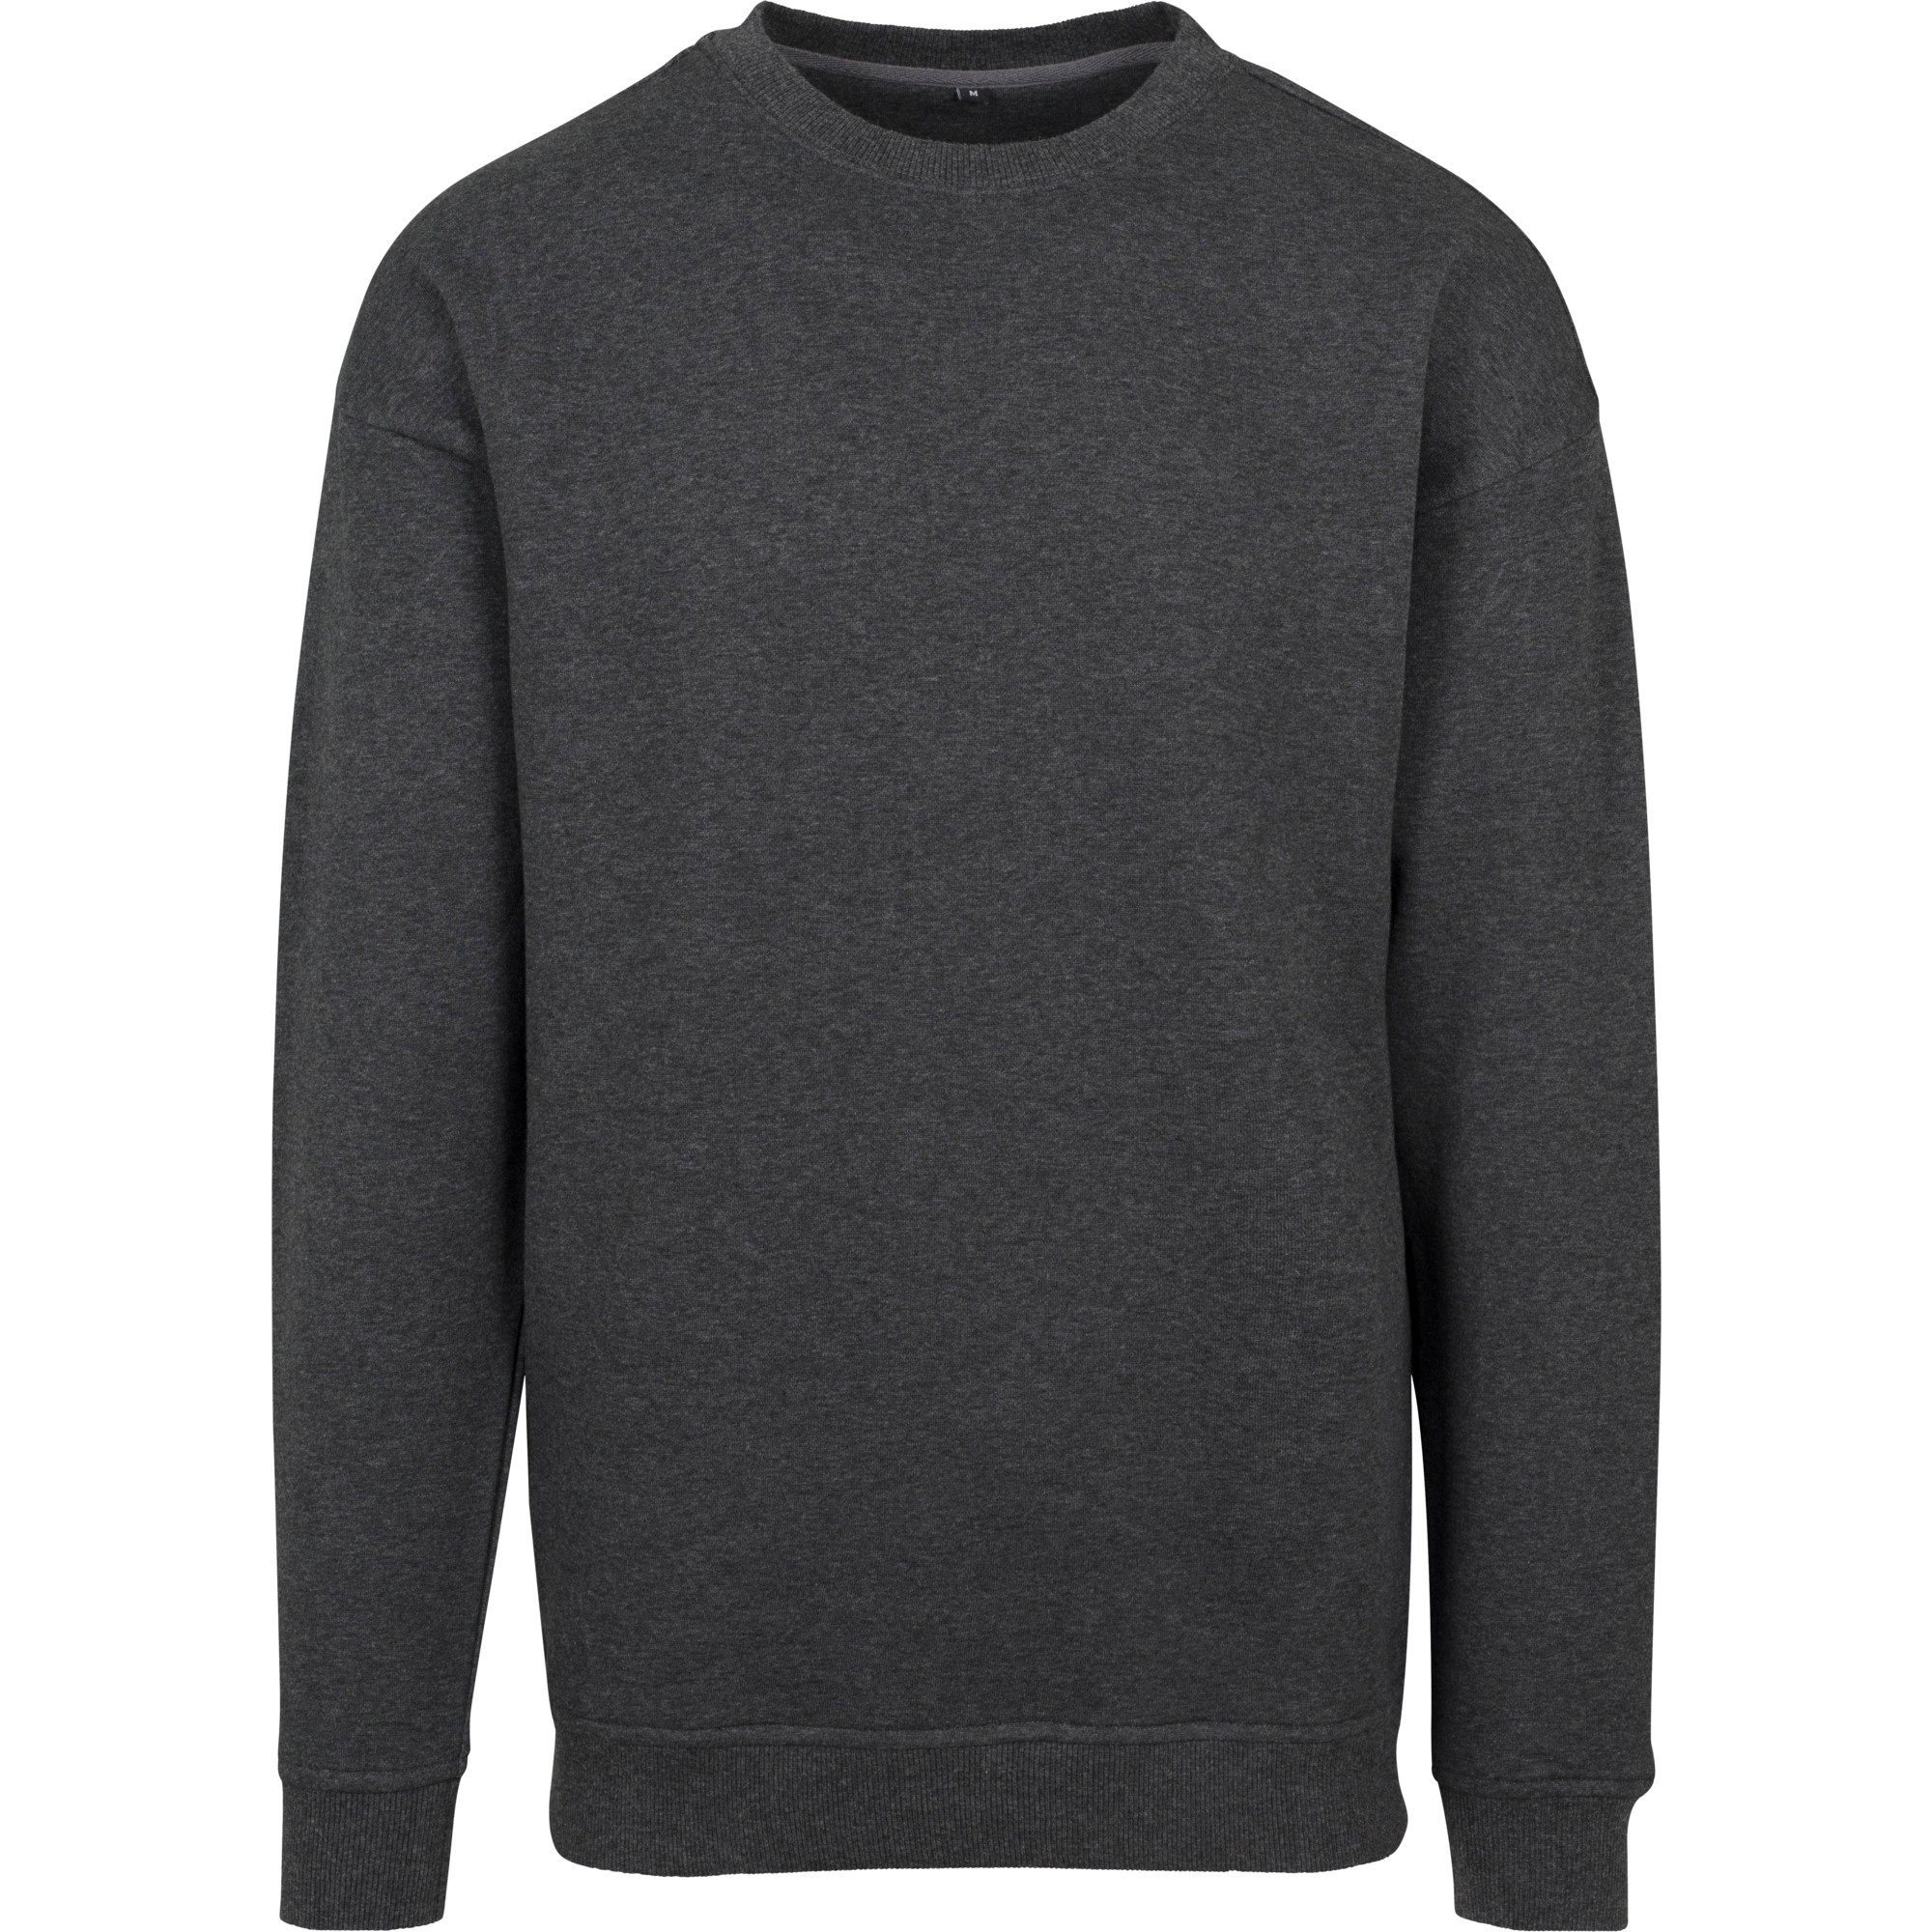 Build Your Brand Sweatshirt schwerer Herren Crewneck Sweater Pullover S bis 5XL schwarz